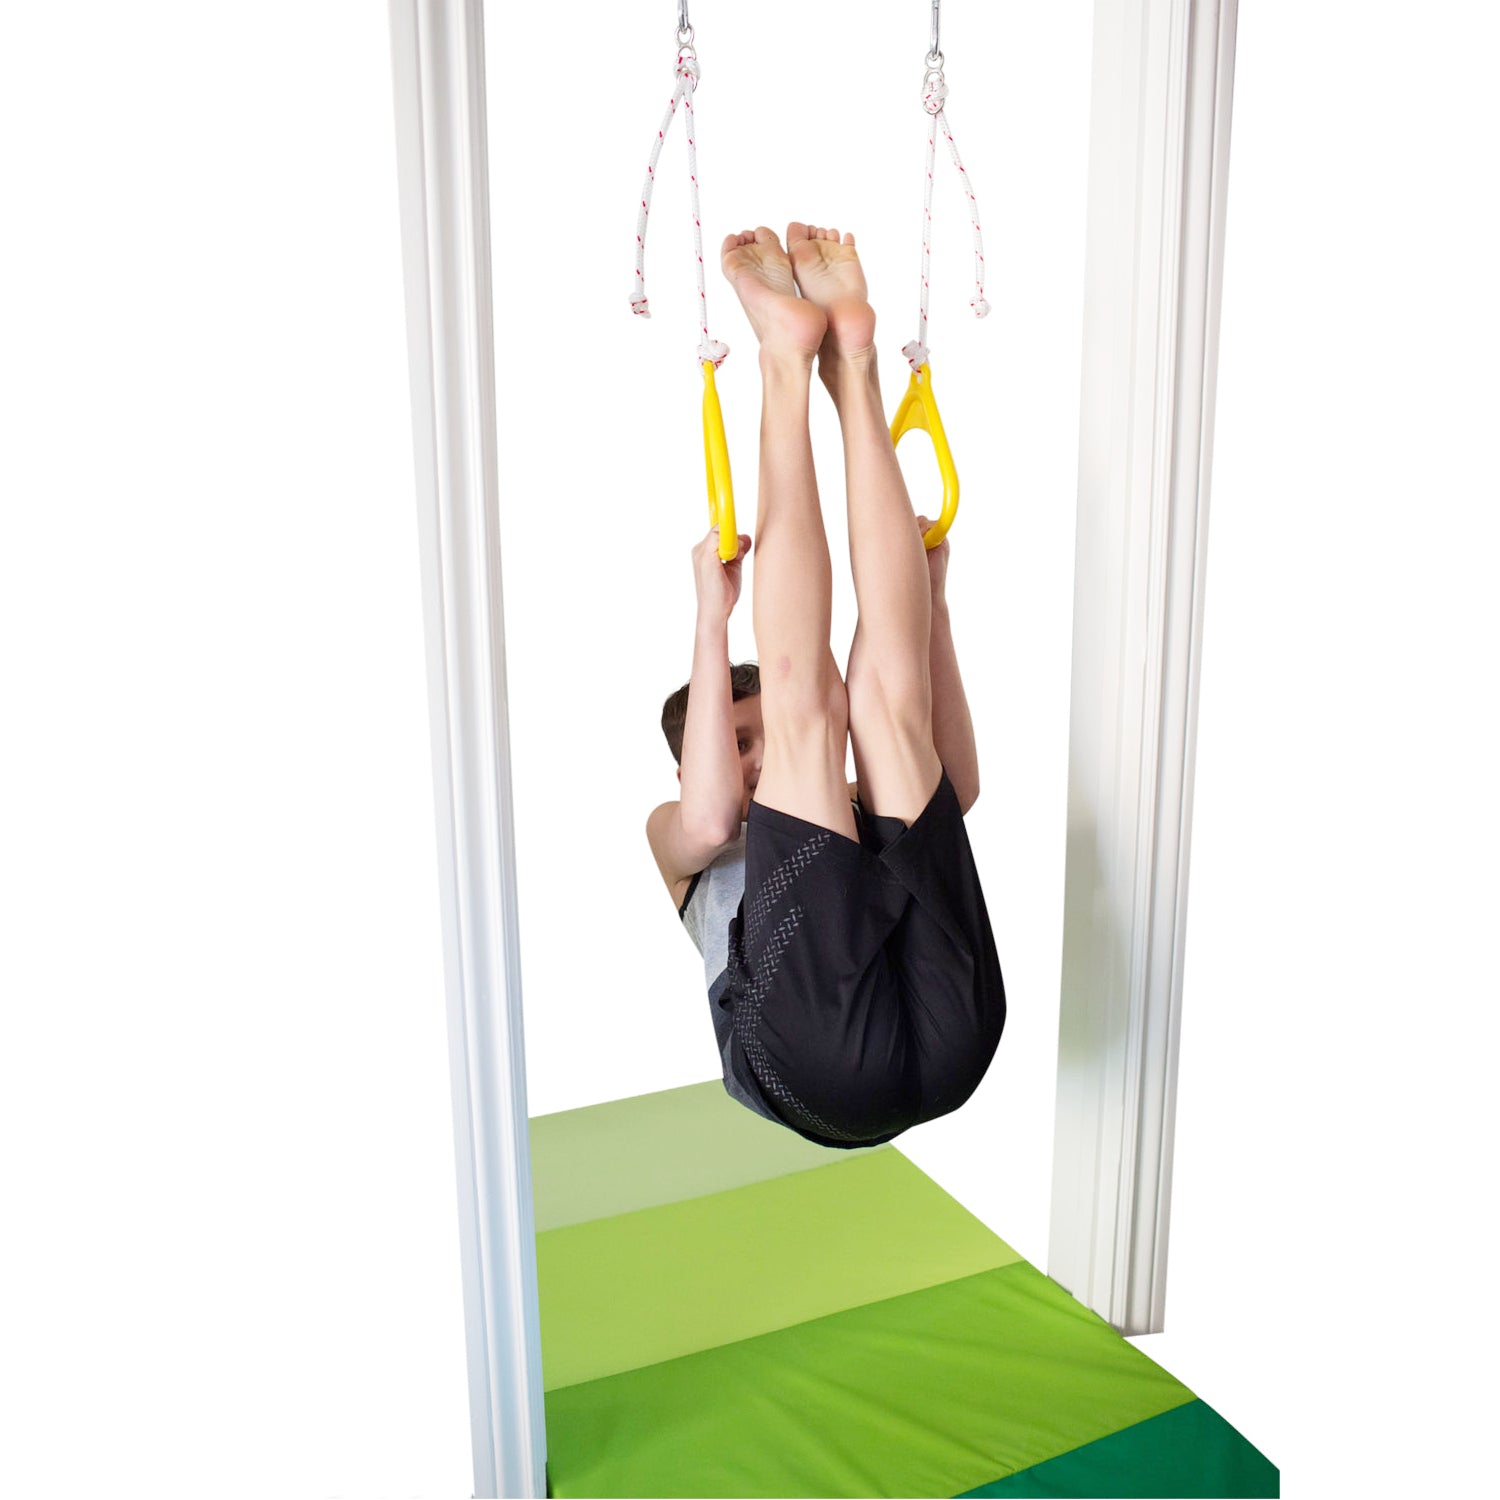 Gymnastics Rings for Kids - Green - DreamGYM